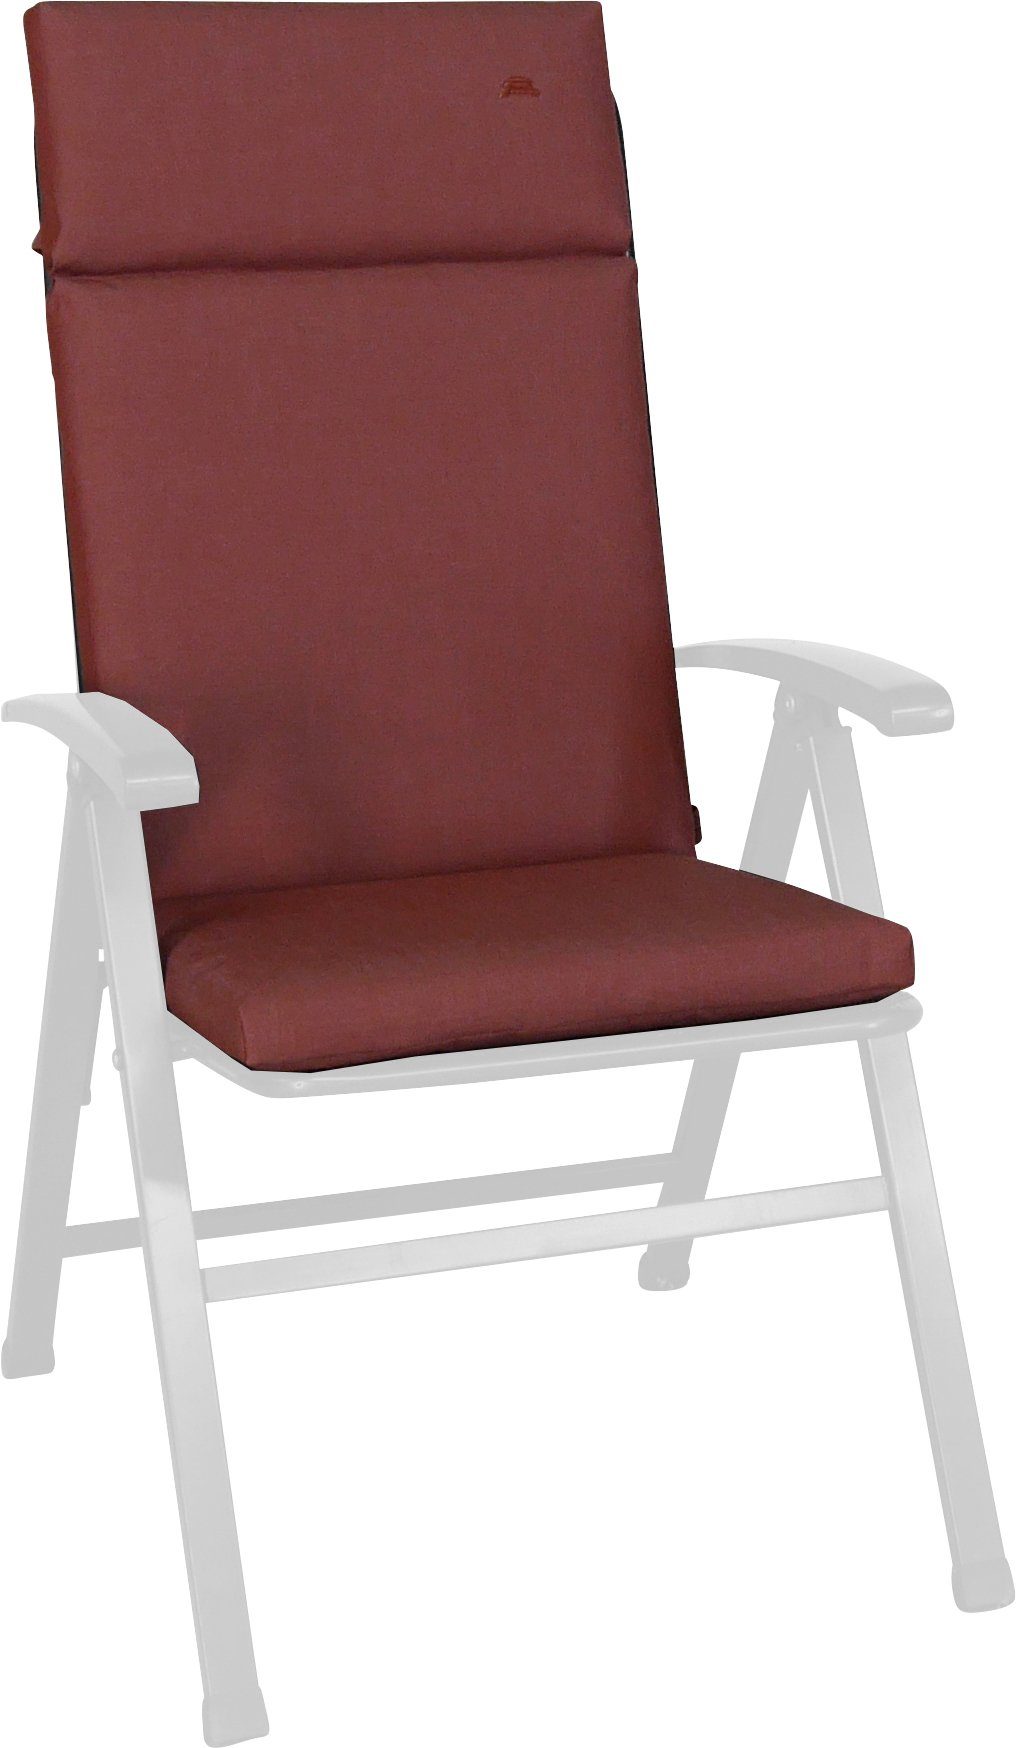 Freizeitmöbel Angerer Sun, terracotta St) Sesselauflage (1